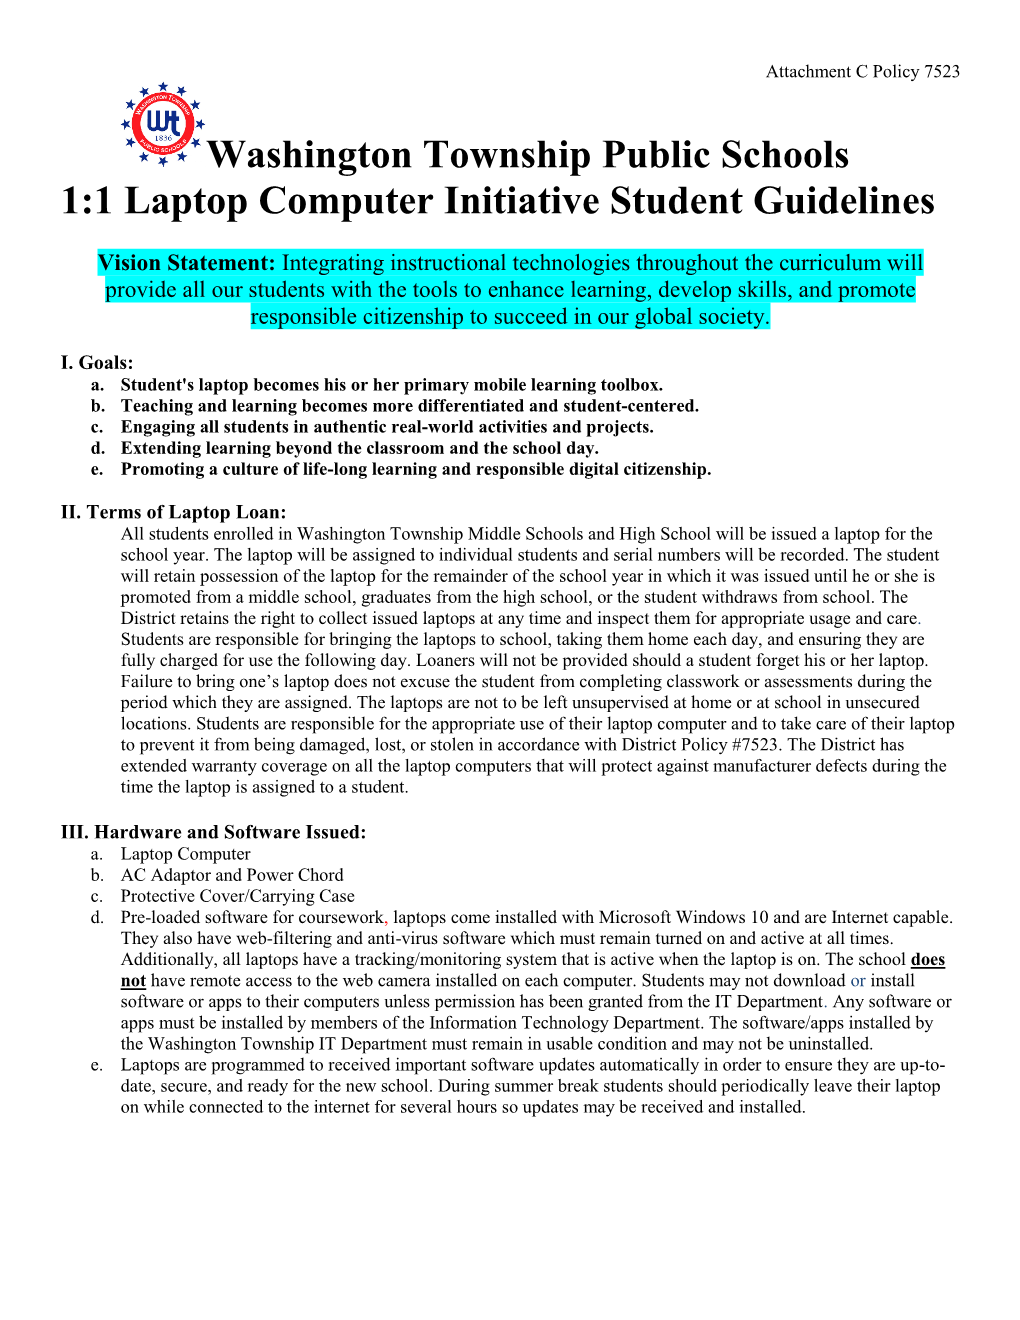 Washington Township Public Schools 1:1 Laptop Computer Initiative Student Guidelines